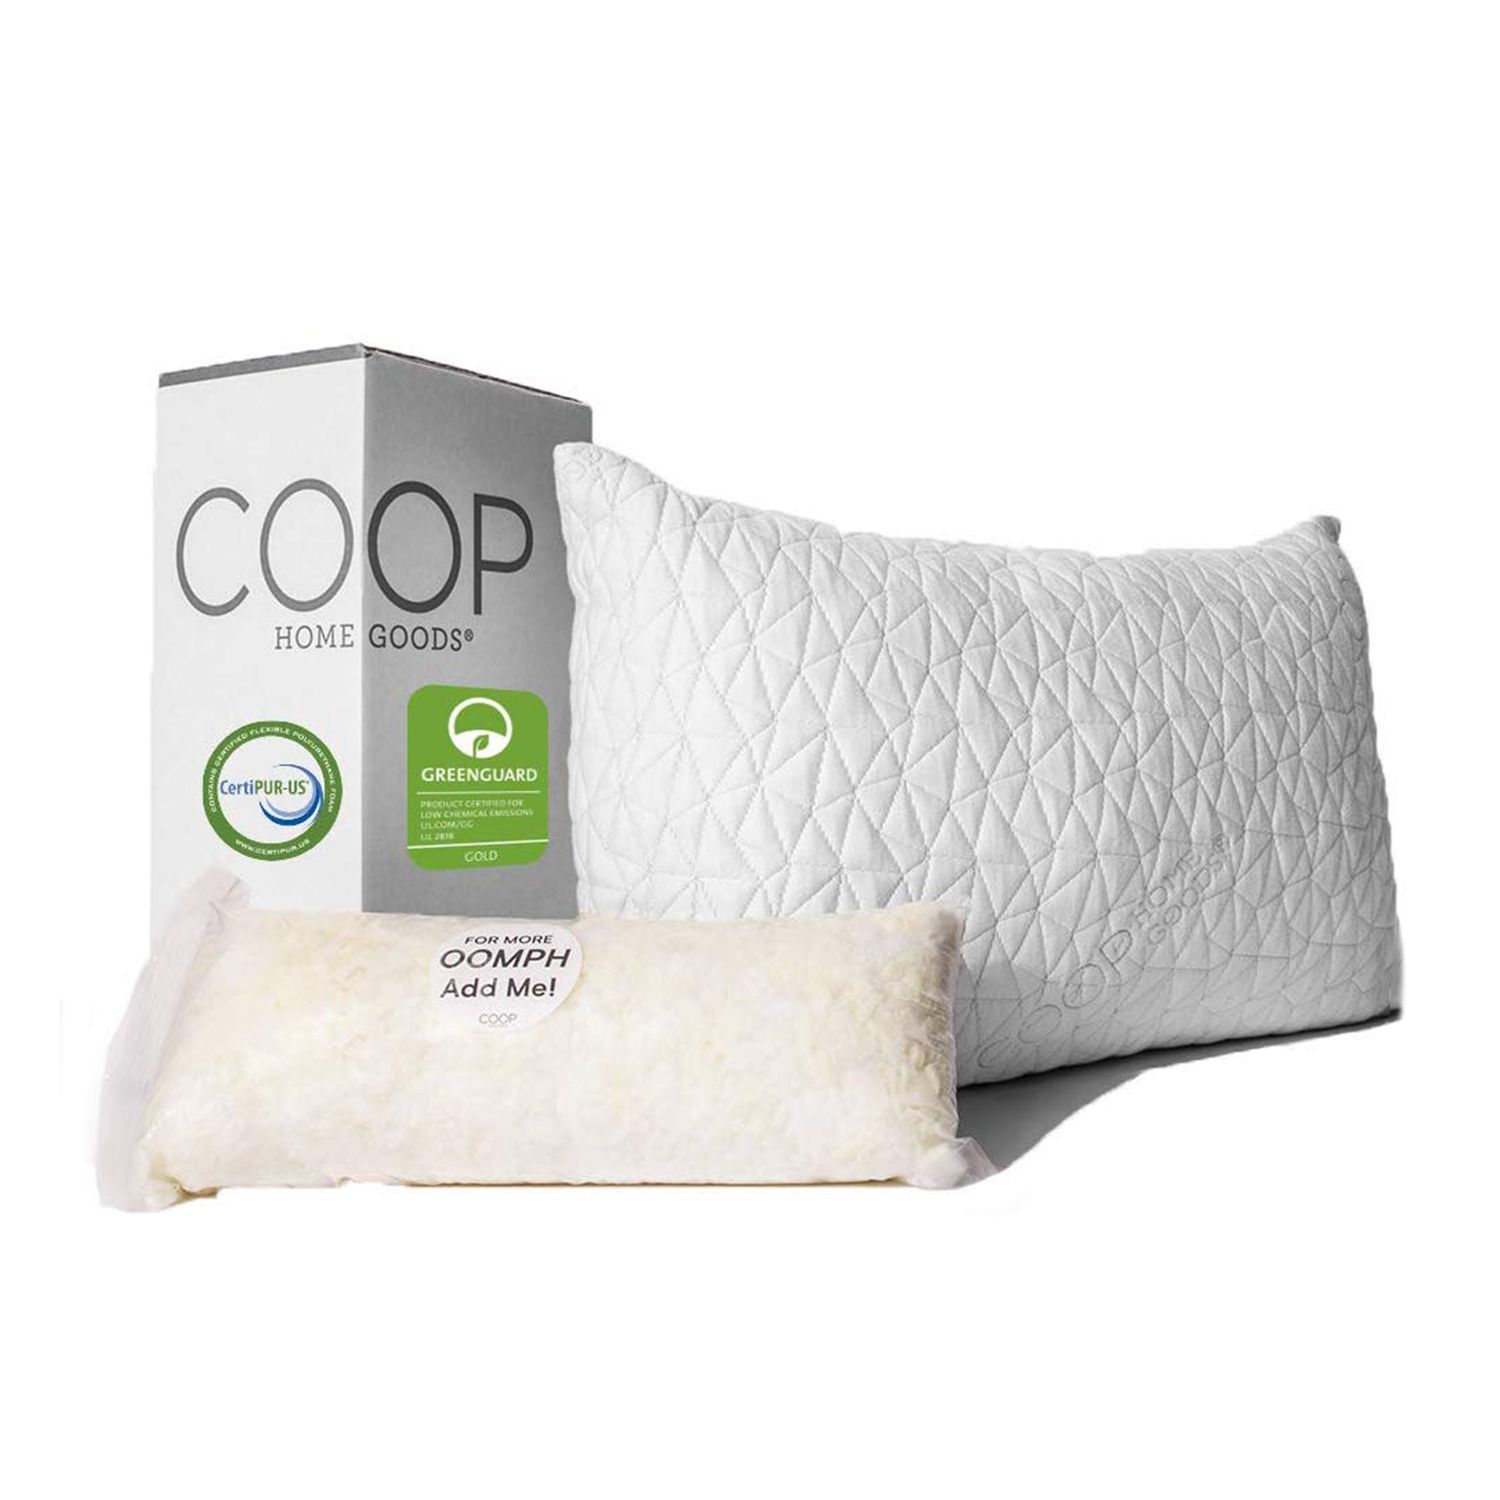 Coop Home Goods Premium stillanlegt loftpúði